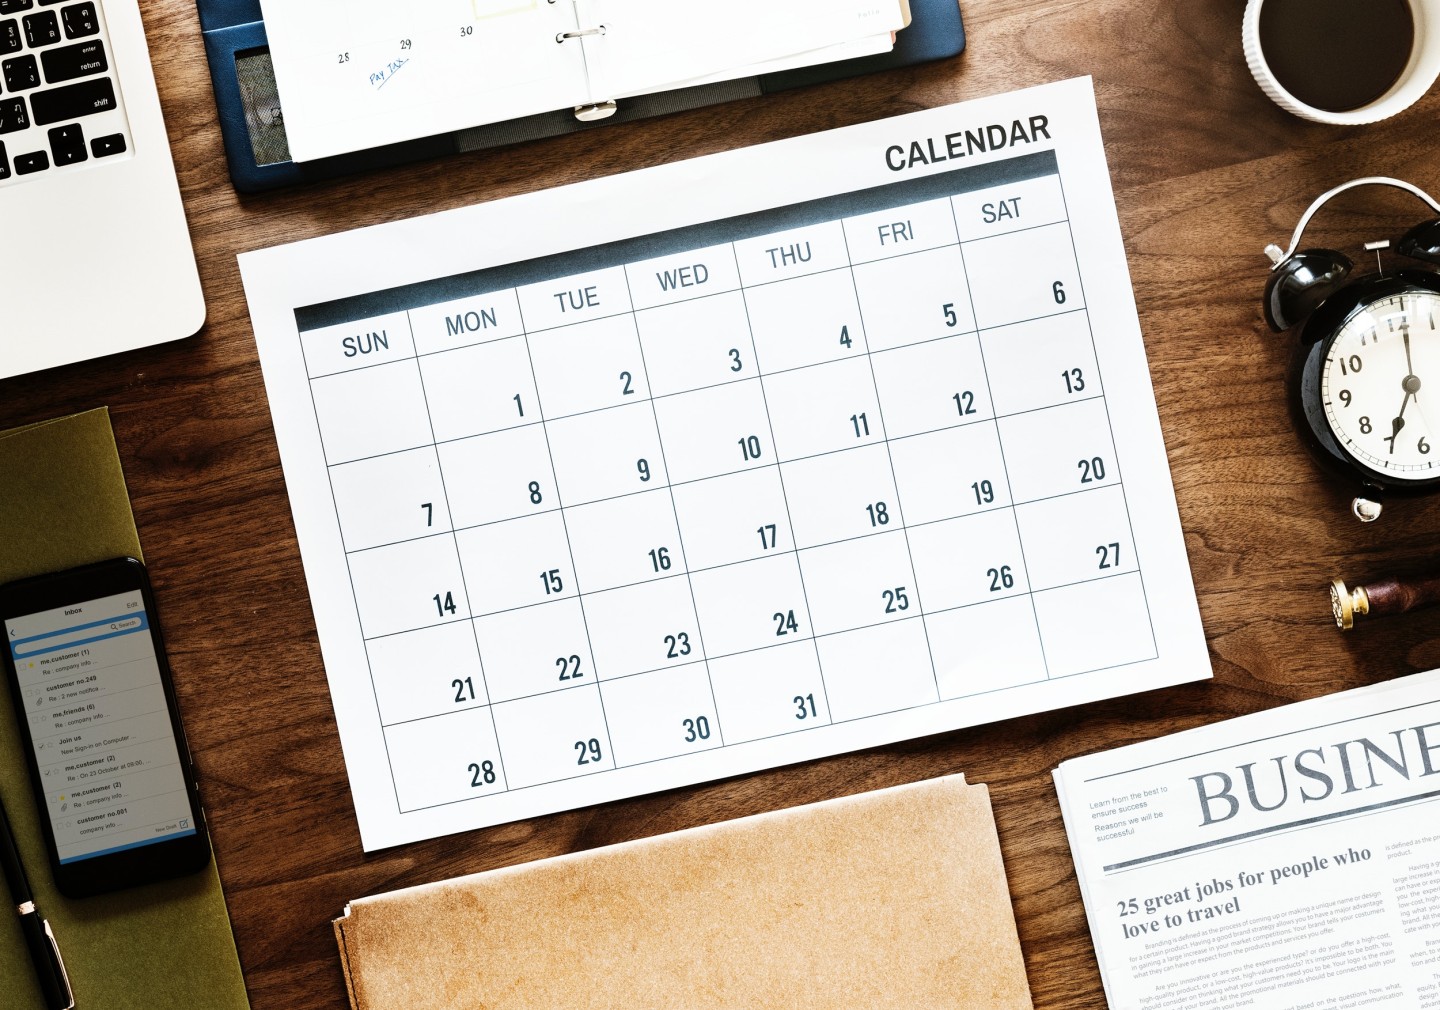 agenda-calendar-data-1020323